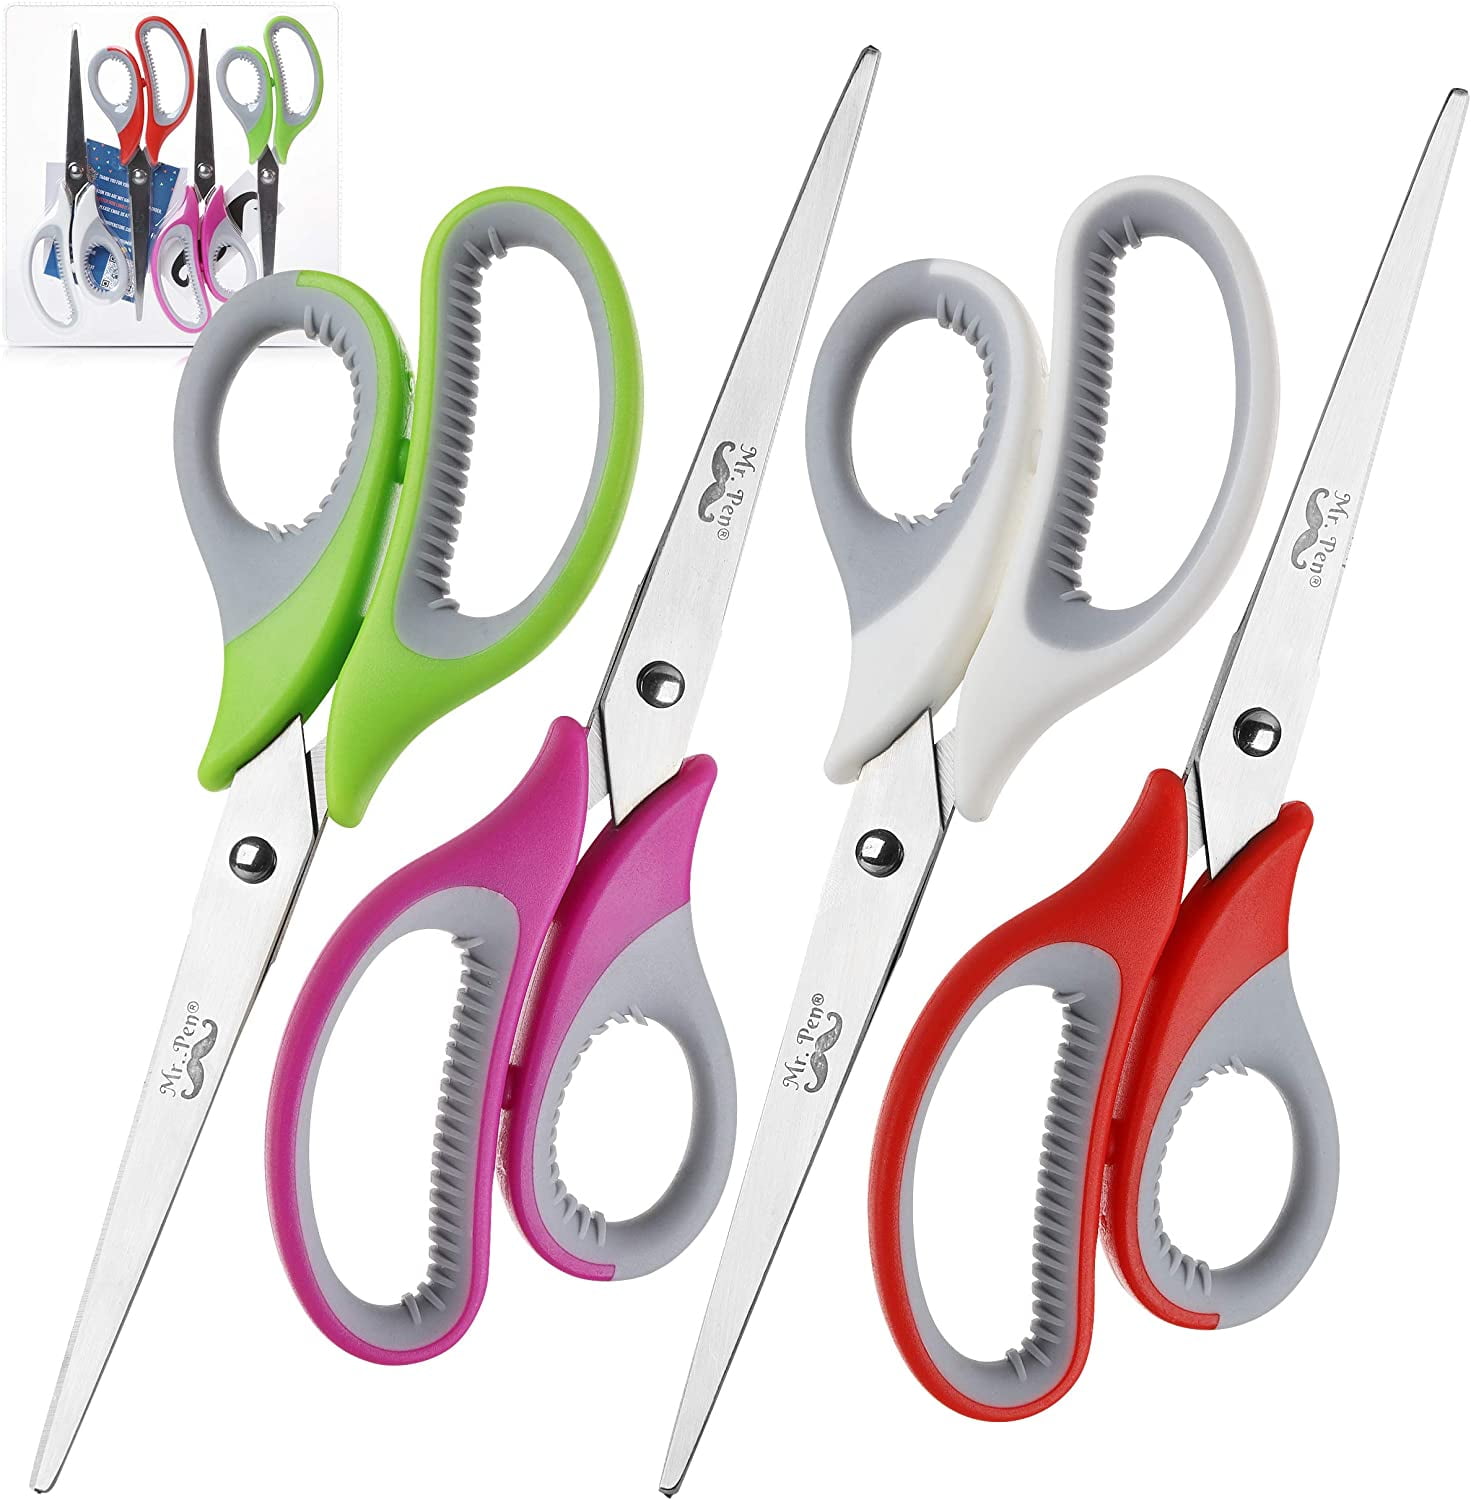 Scissors Bulk Set of 25-Pack 8 Sharp Multipurpose School, Crafts, Home, Work